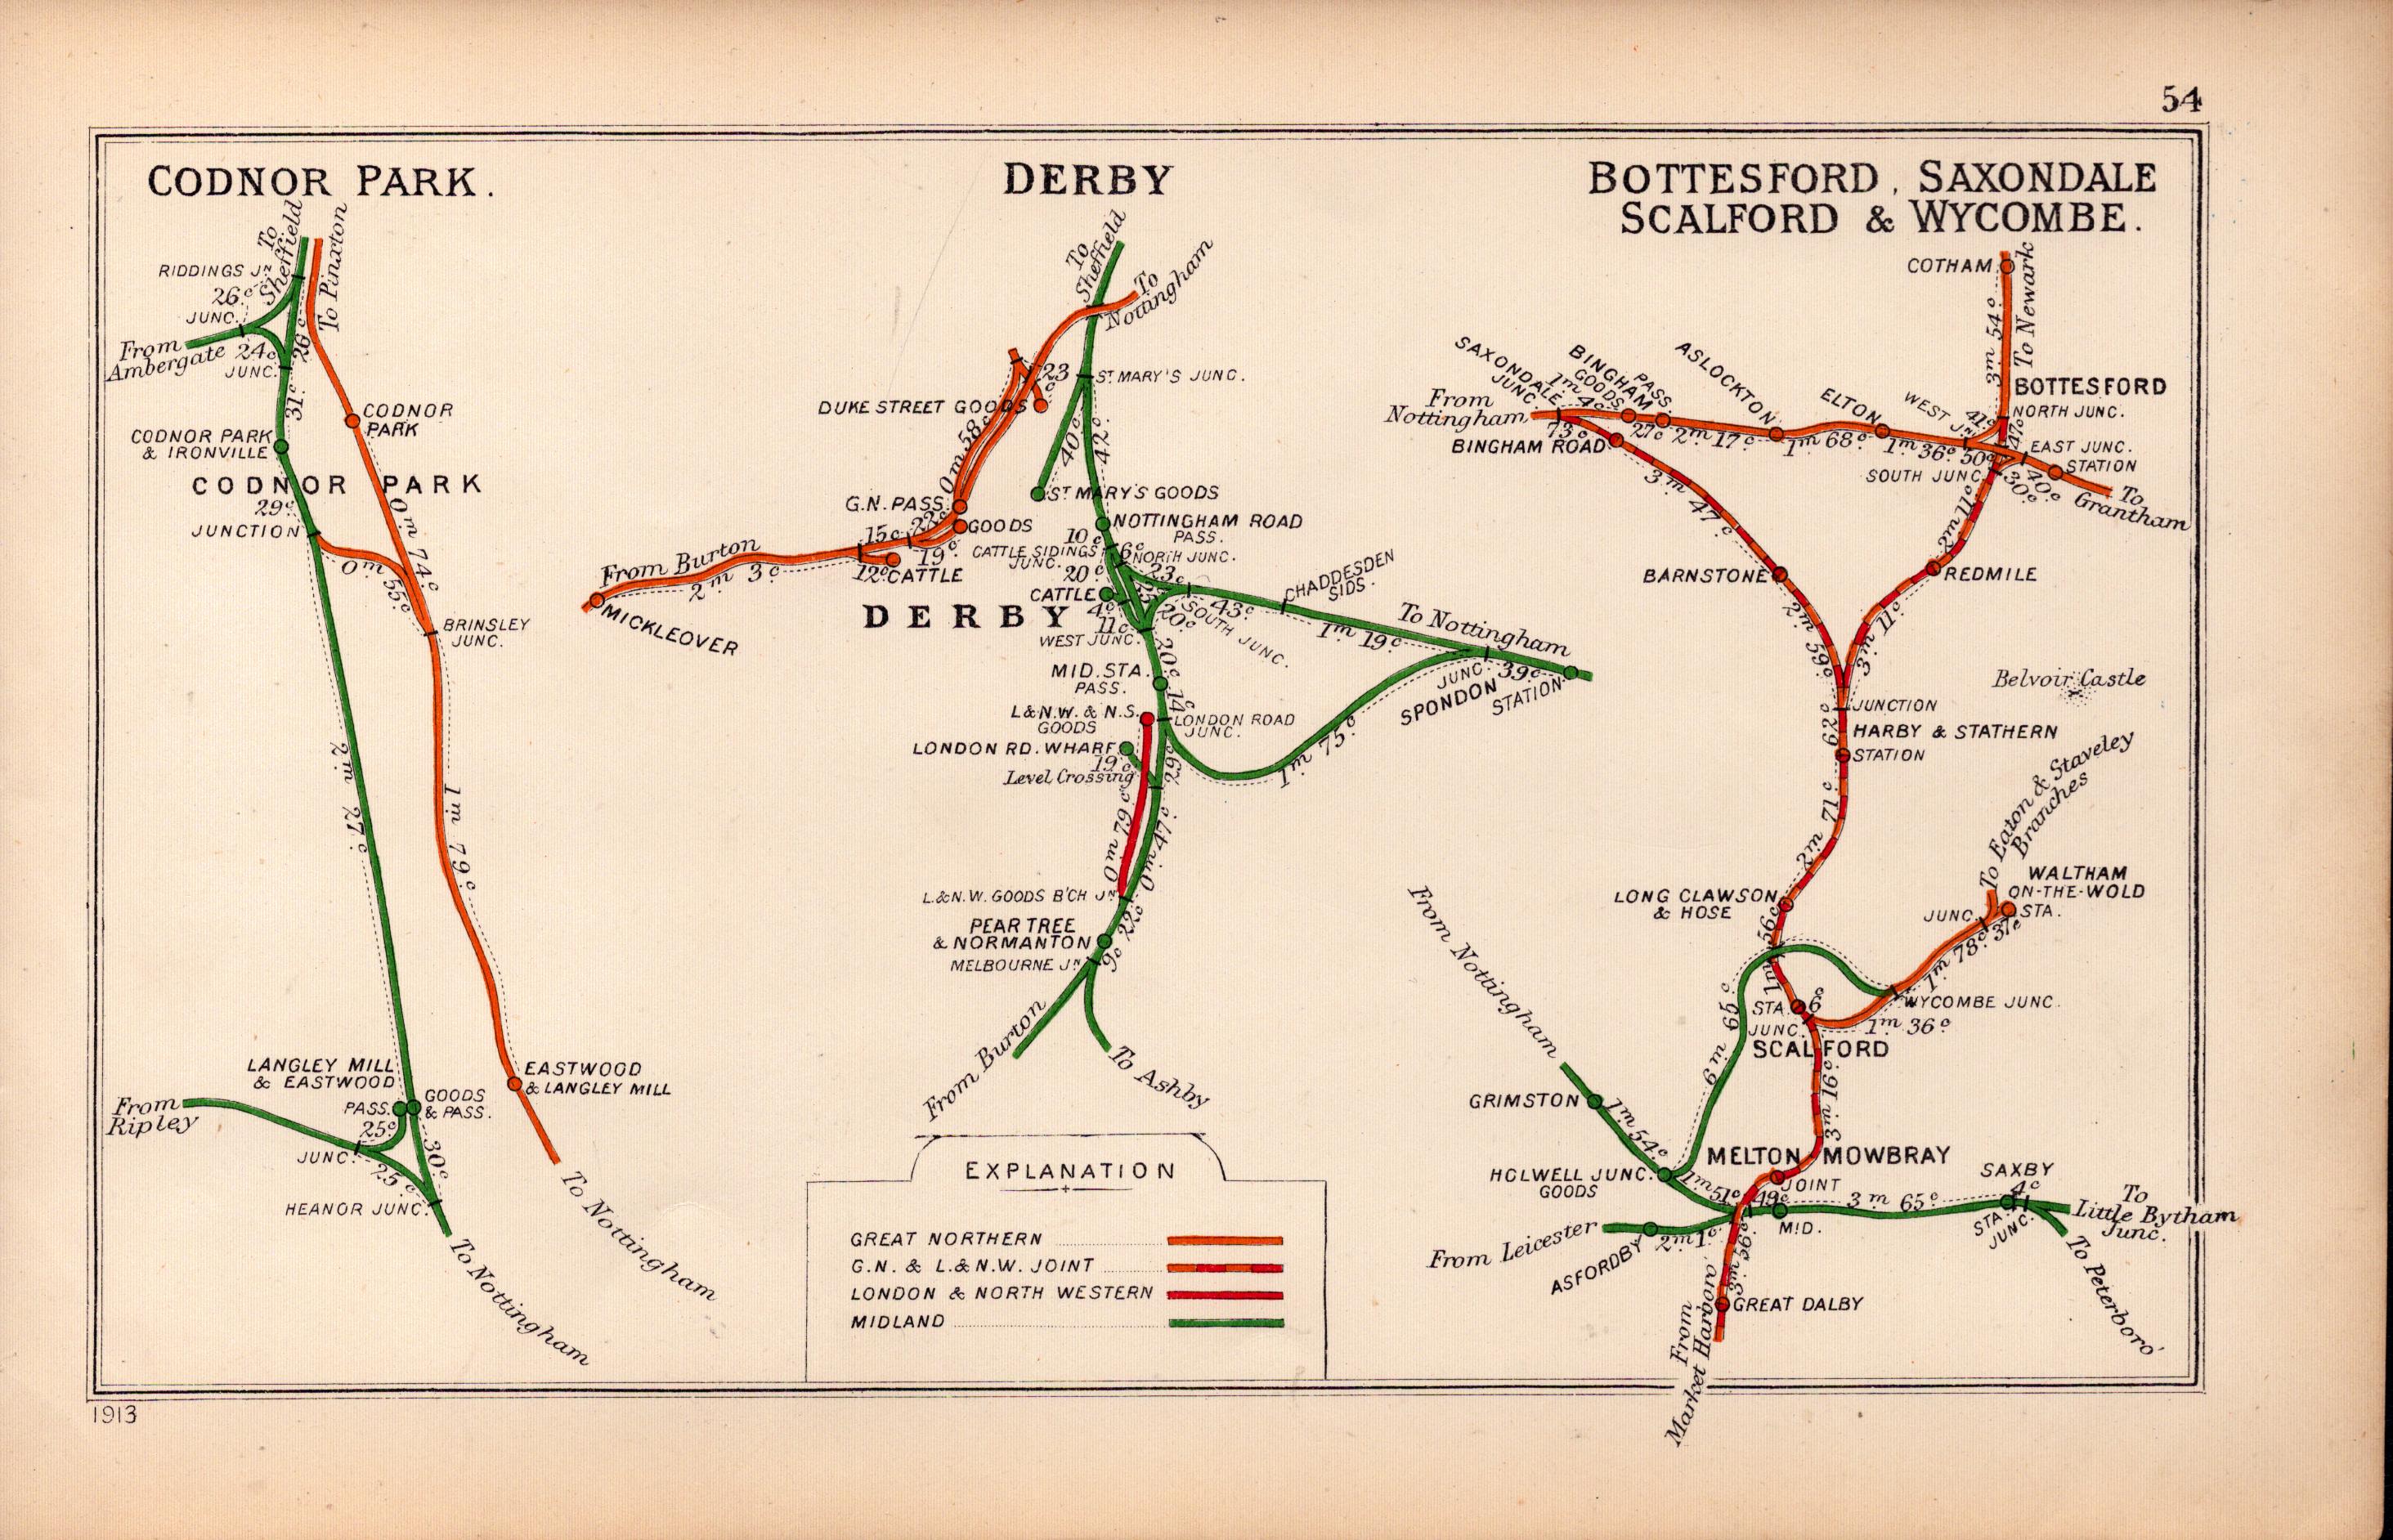 Codnor Park, Derby, Wycombe Antique Railway Junction Diagram-54.